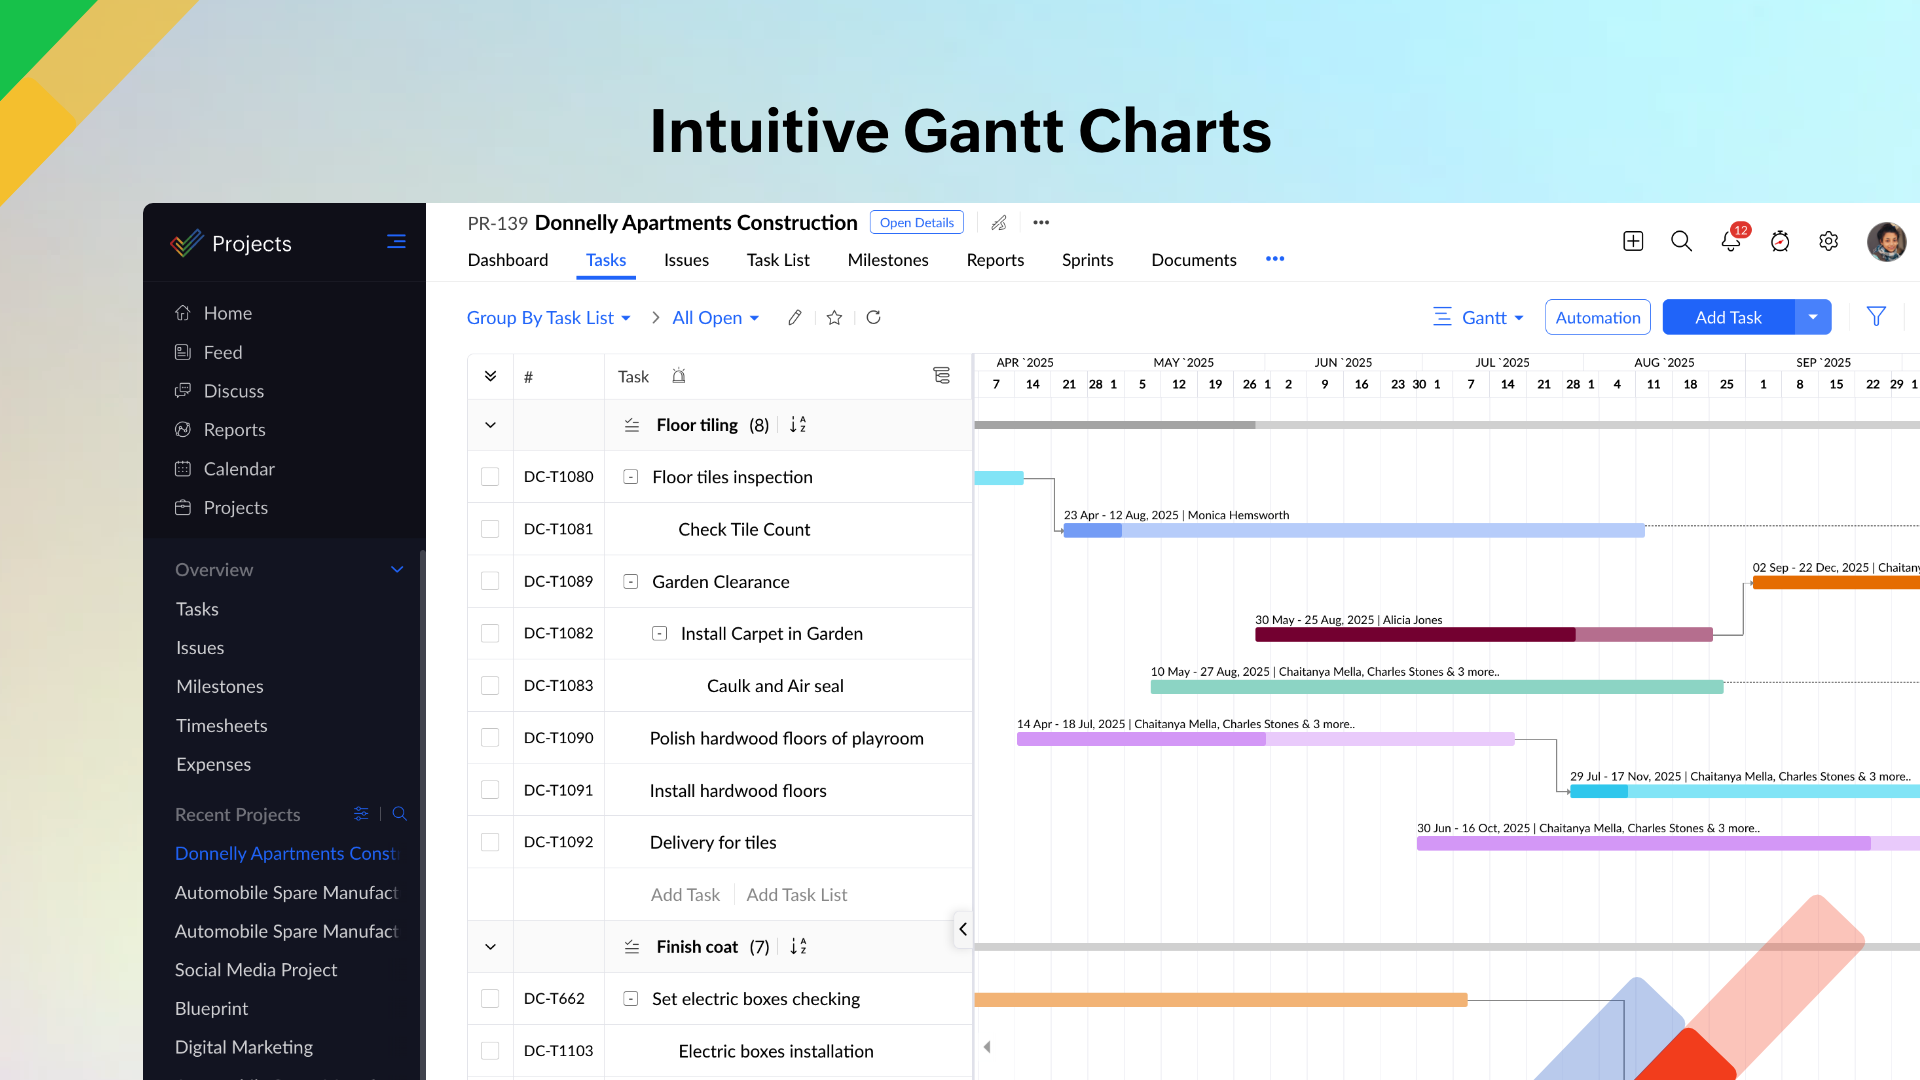 Intuitive Gantt Charts